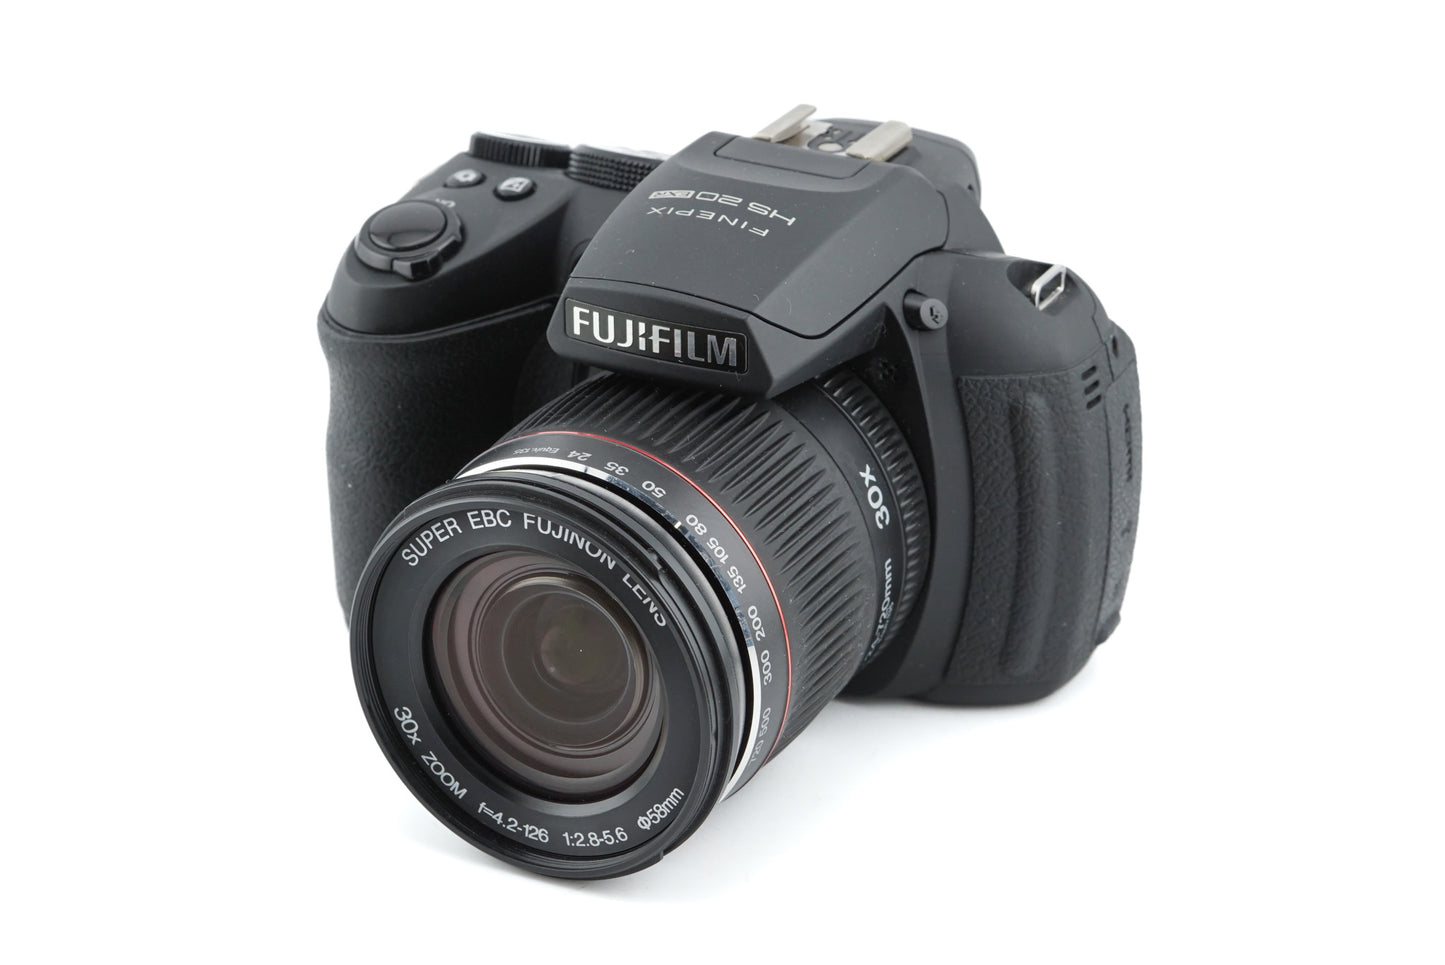 Fujifilm Finepix HS20 EXR - Camera